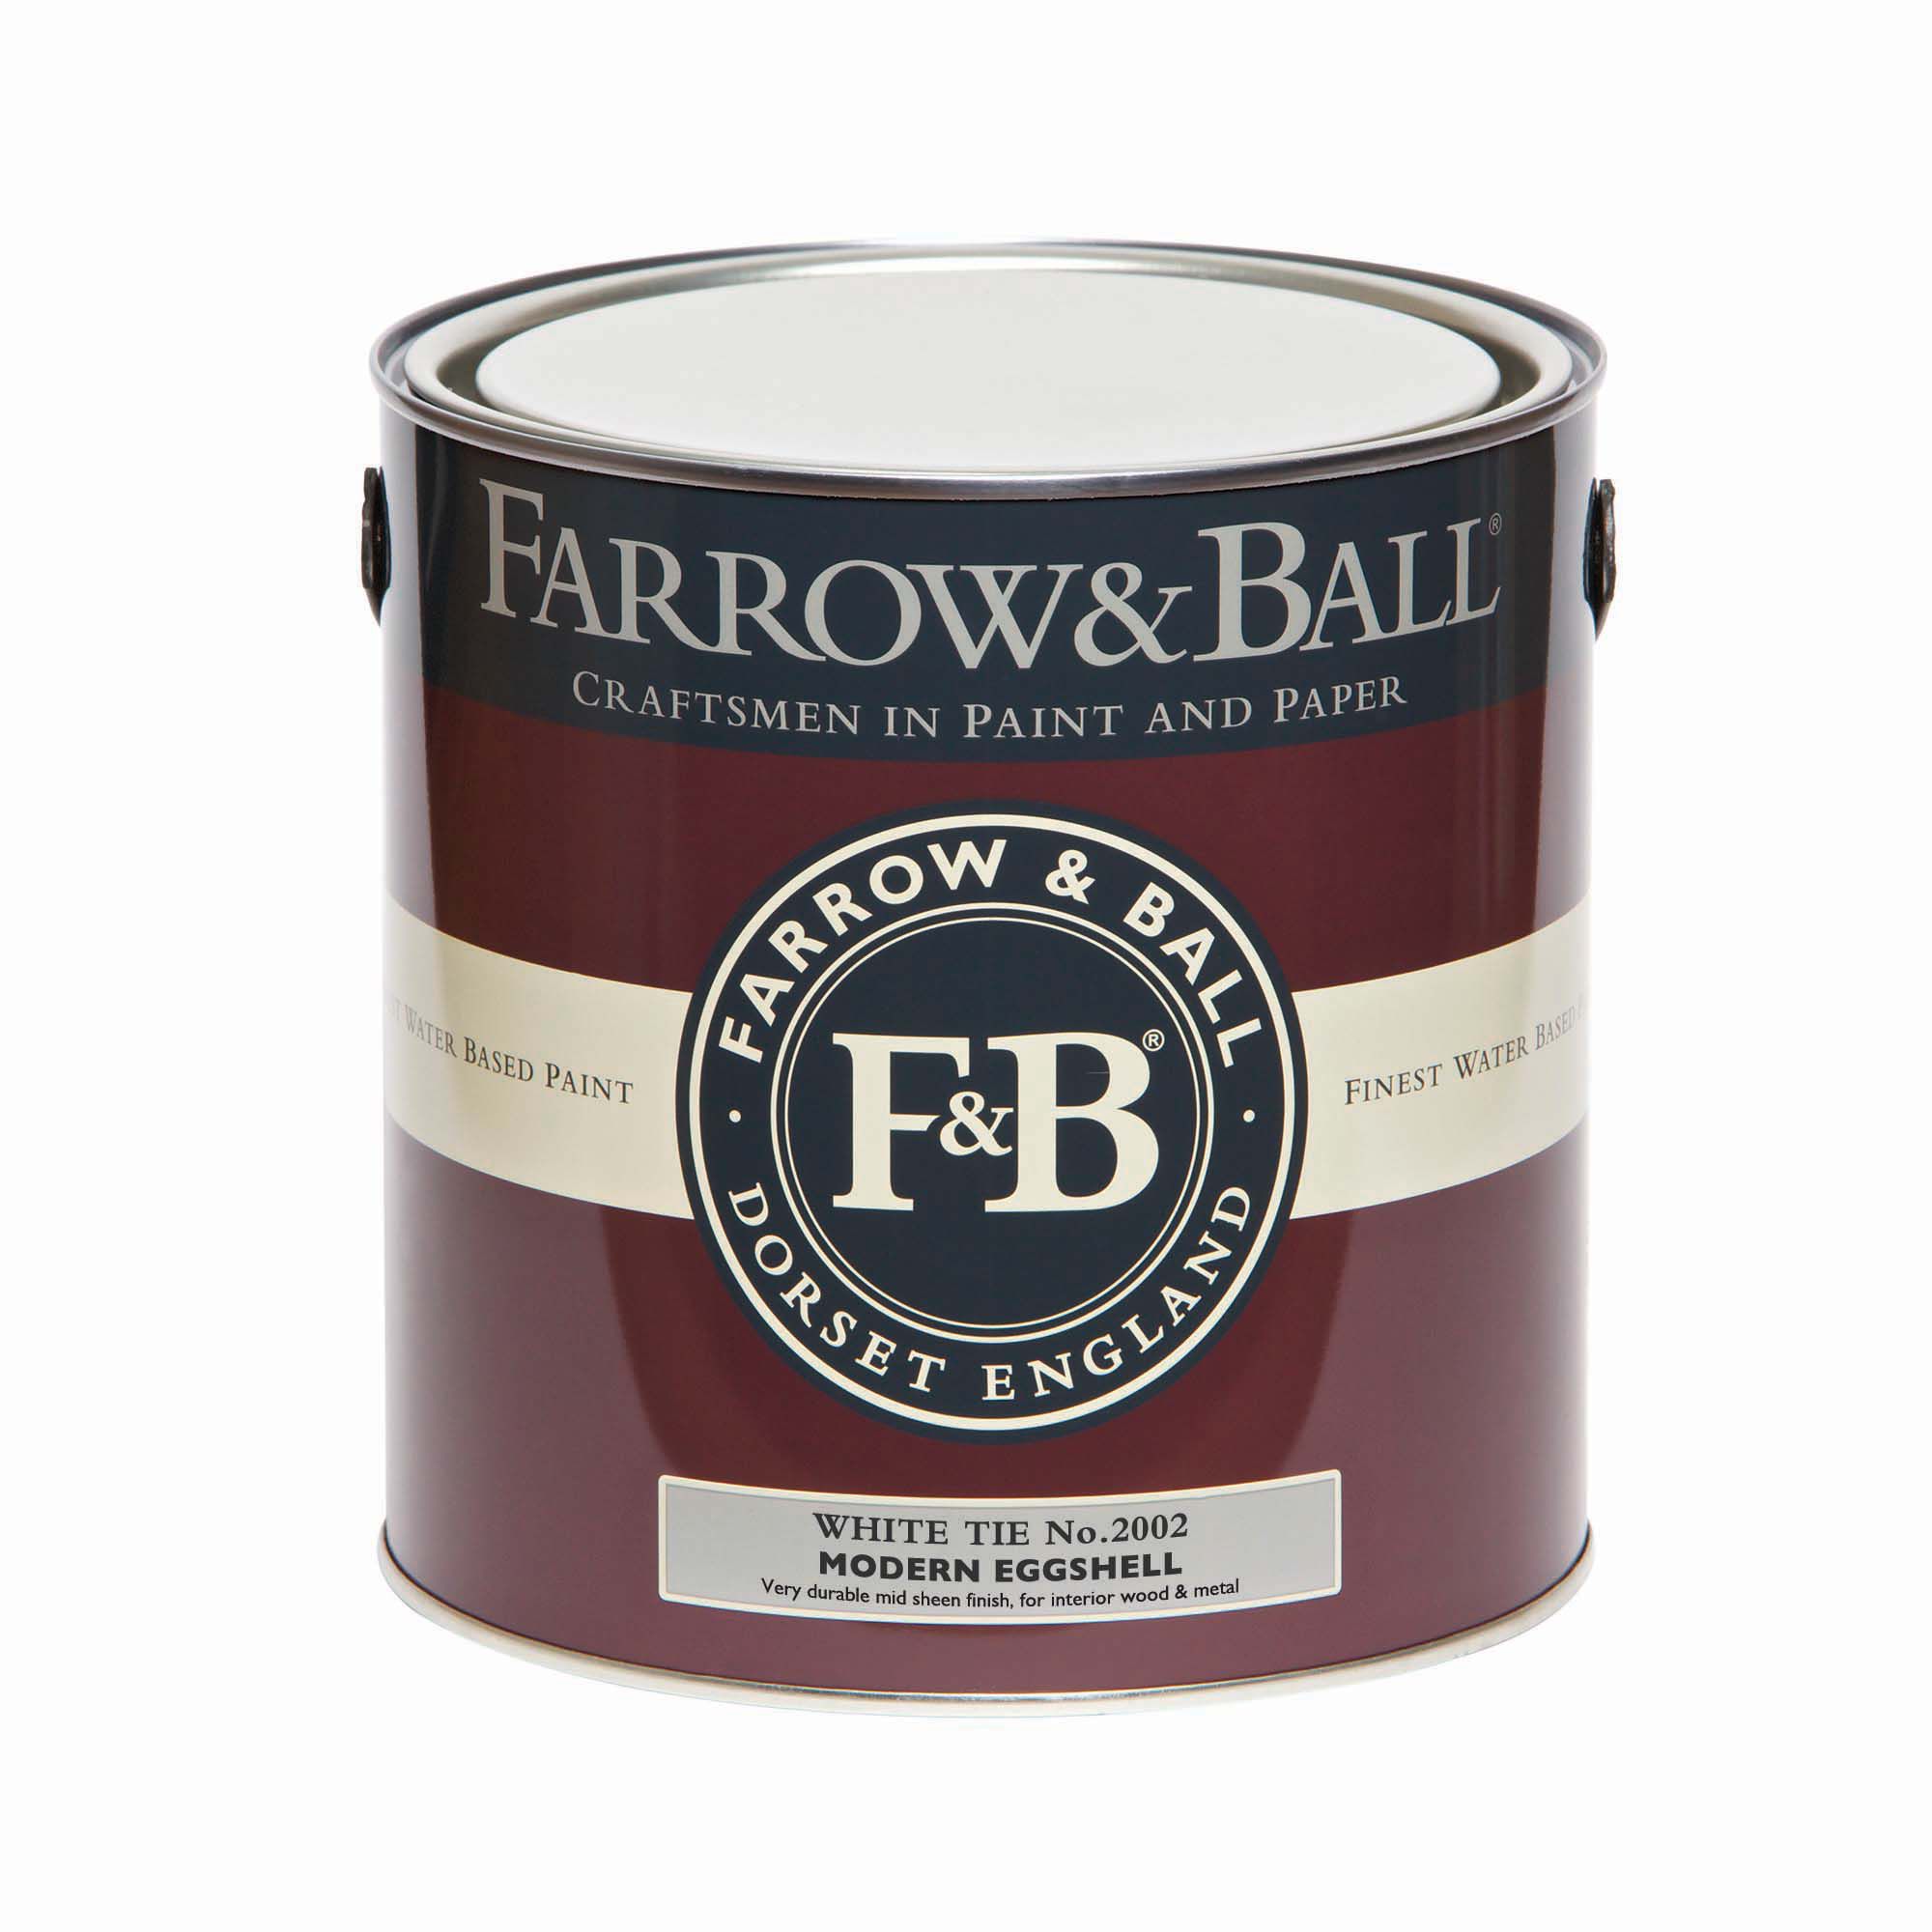 Farrow & Ball Modern White Tie No.2002 Eggshell Paint, 2.5L